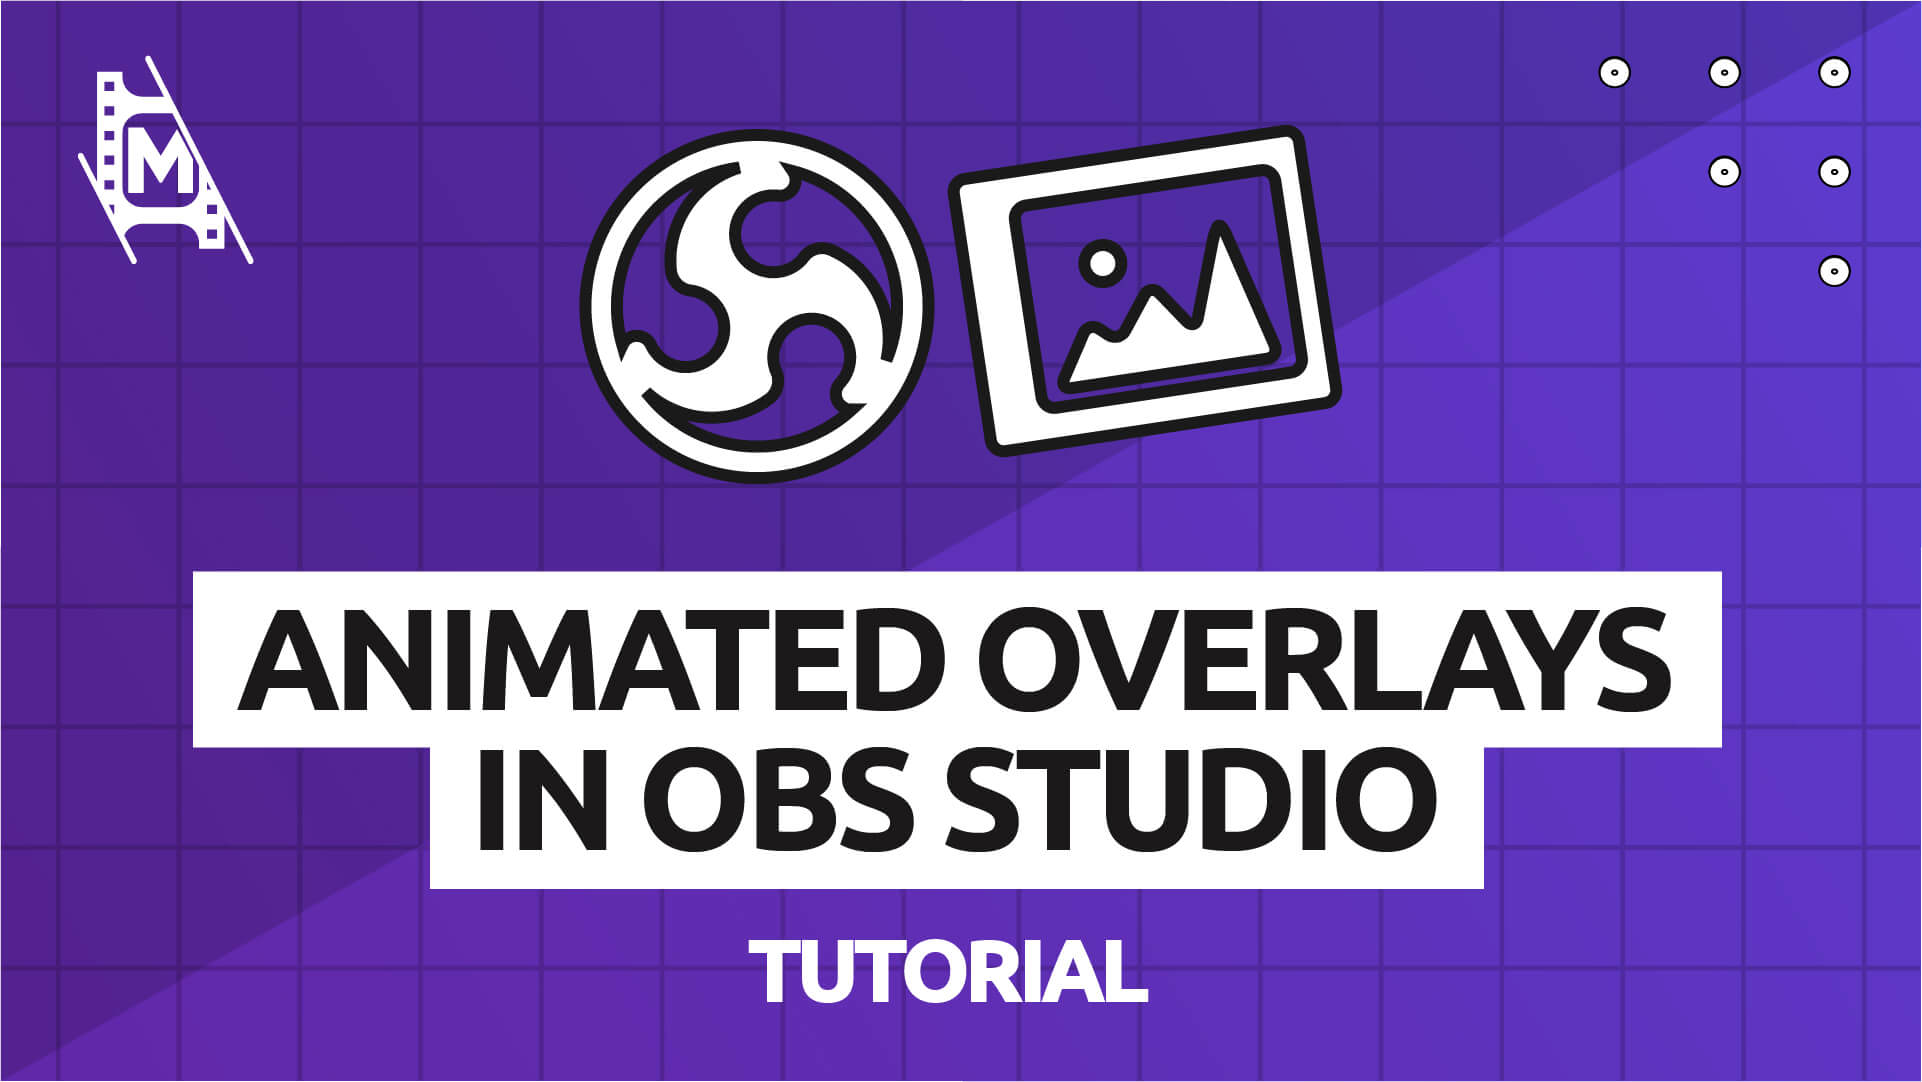 obs studio overlay downloads free